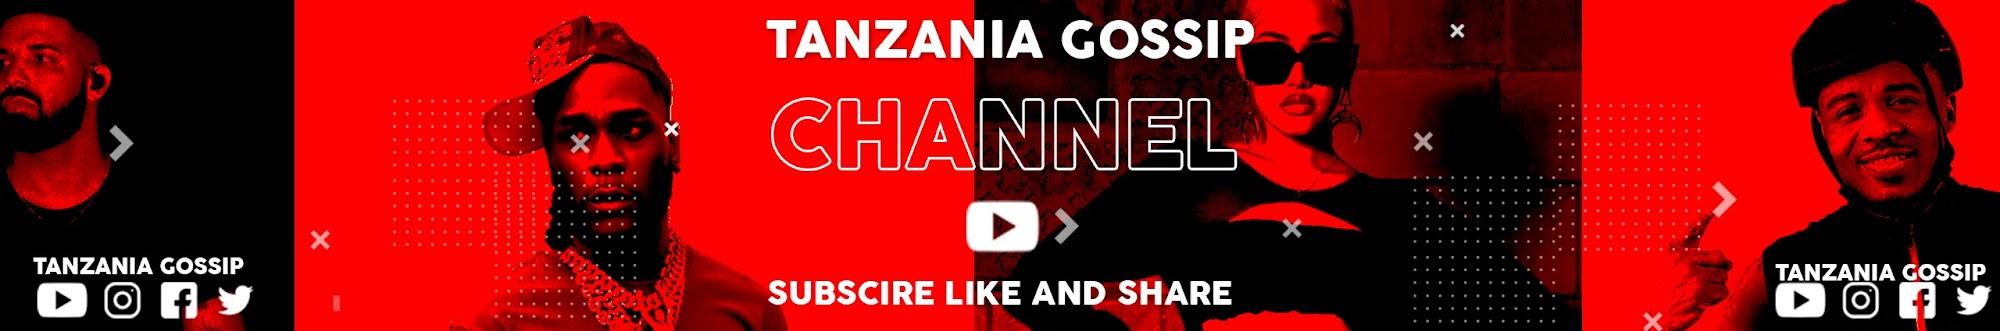 TANZANIA GOSSIP